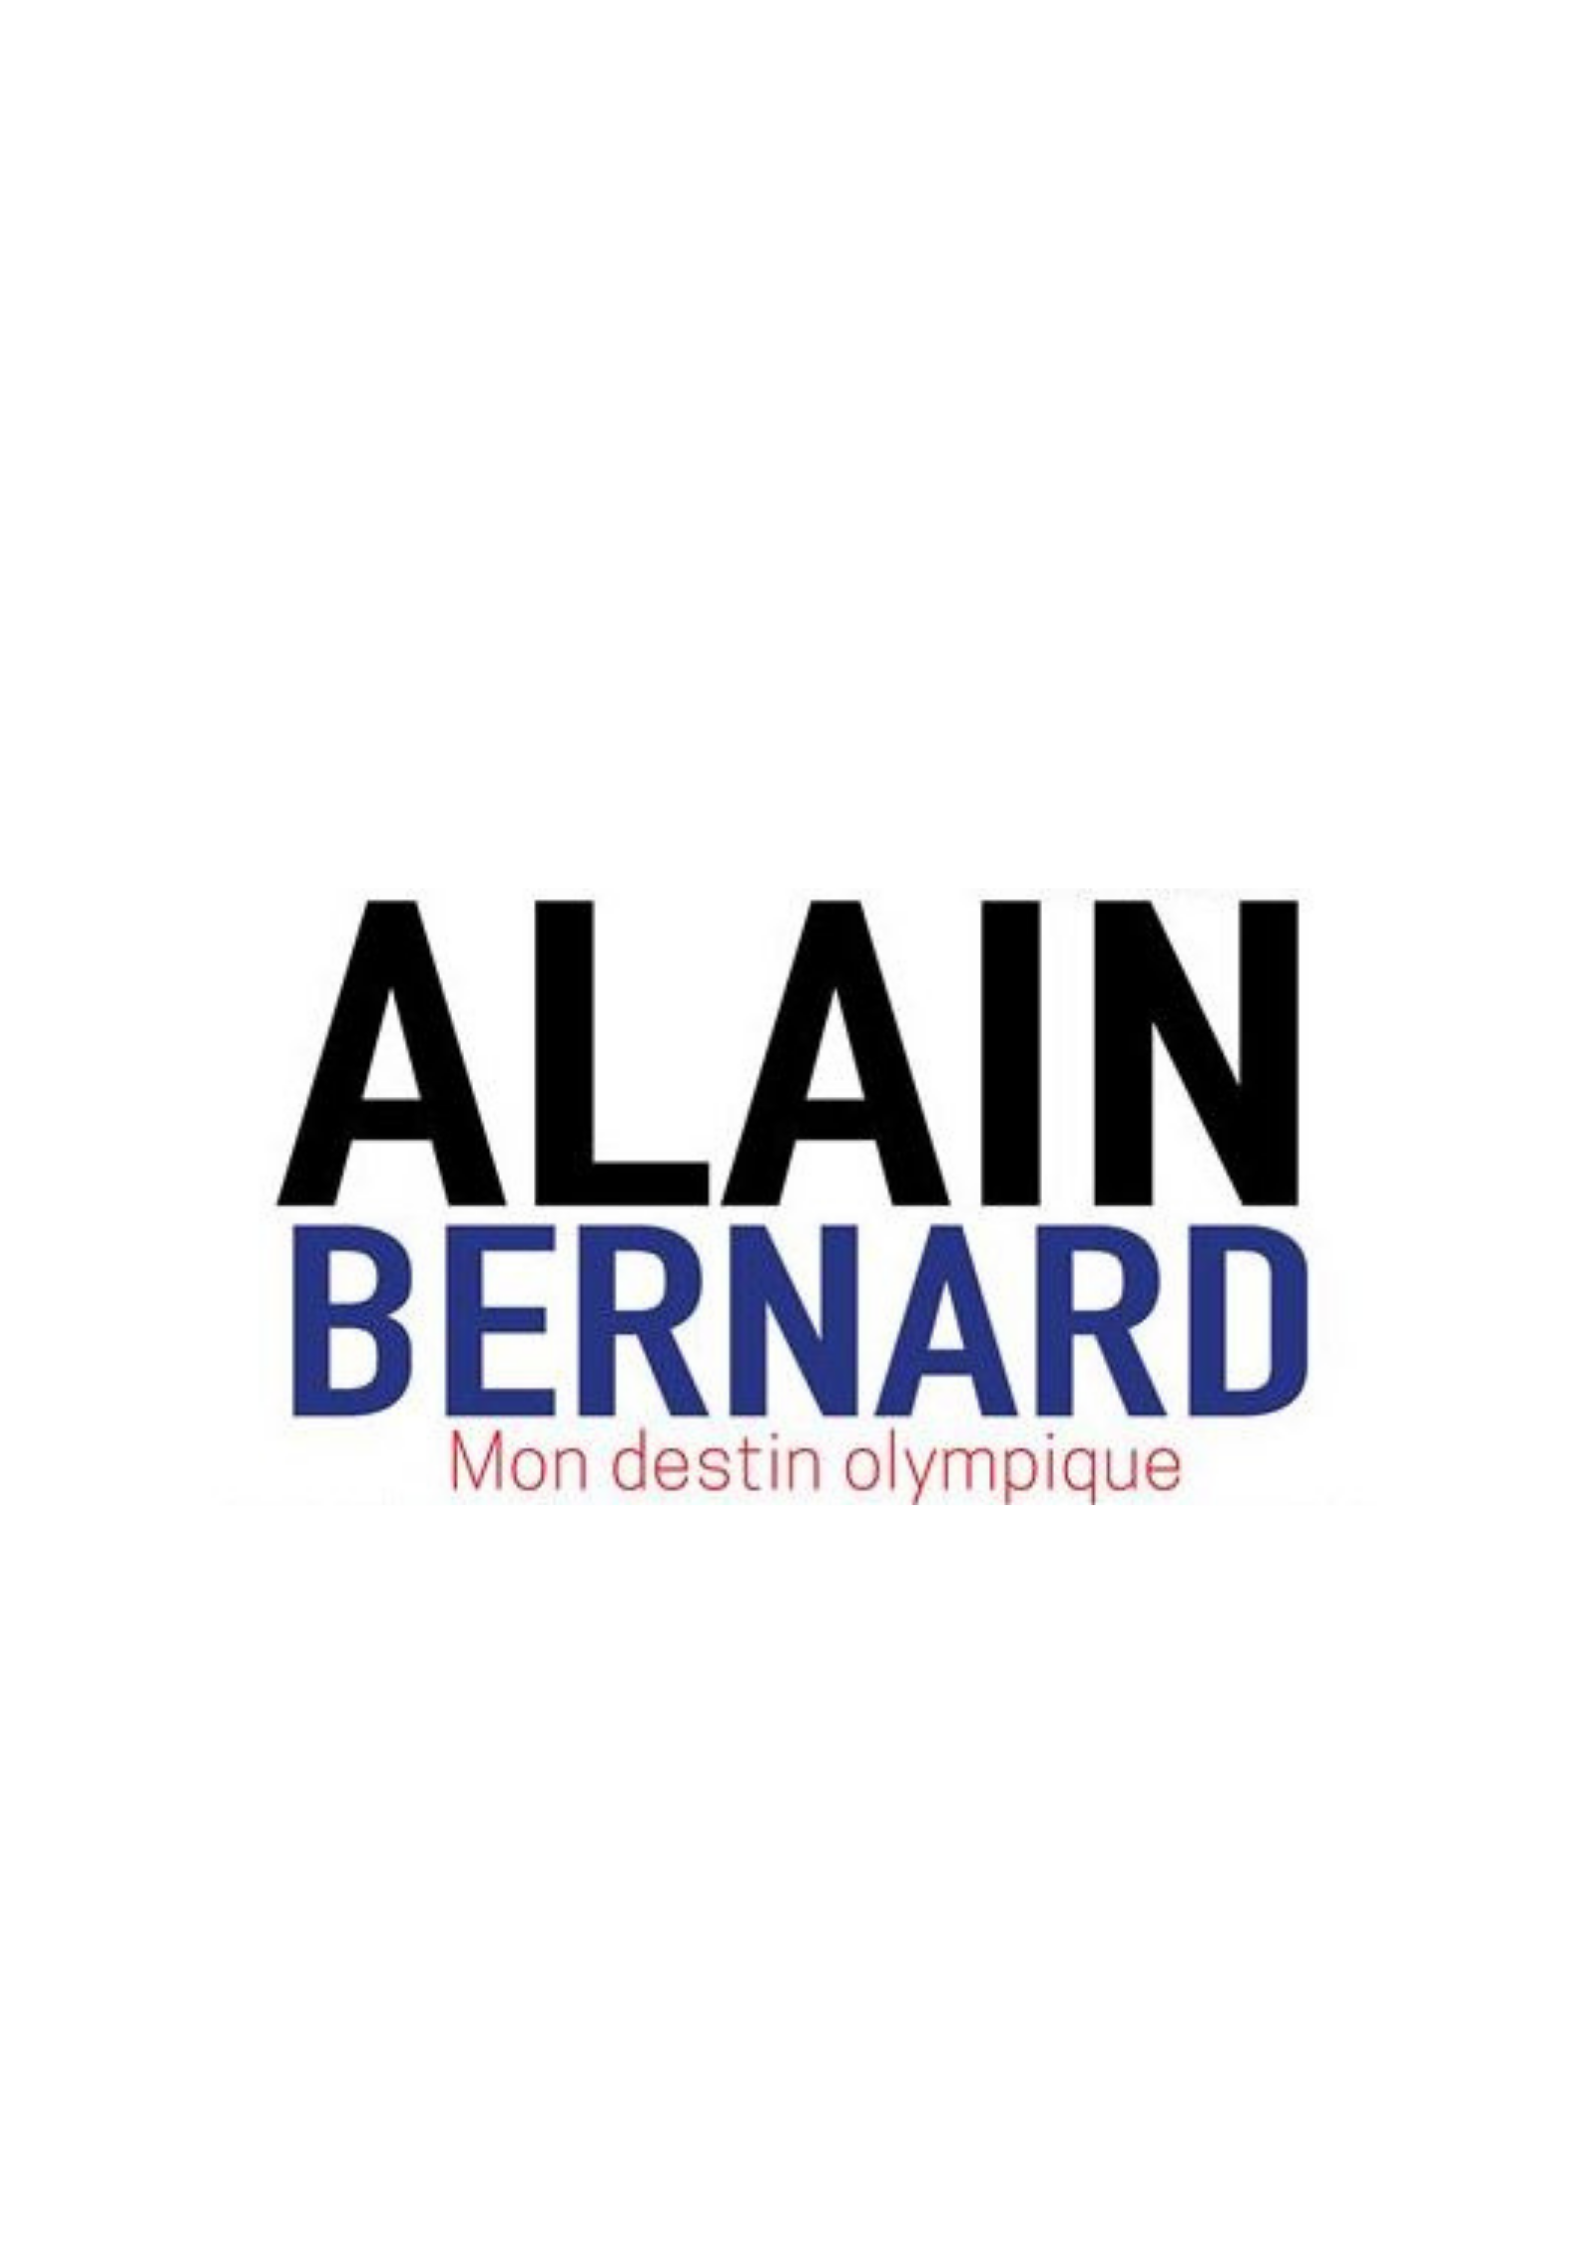 Alain Bernard  : Mon destin olympique